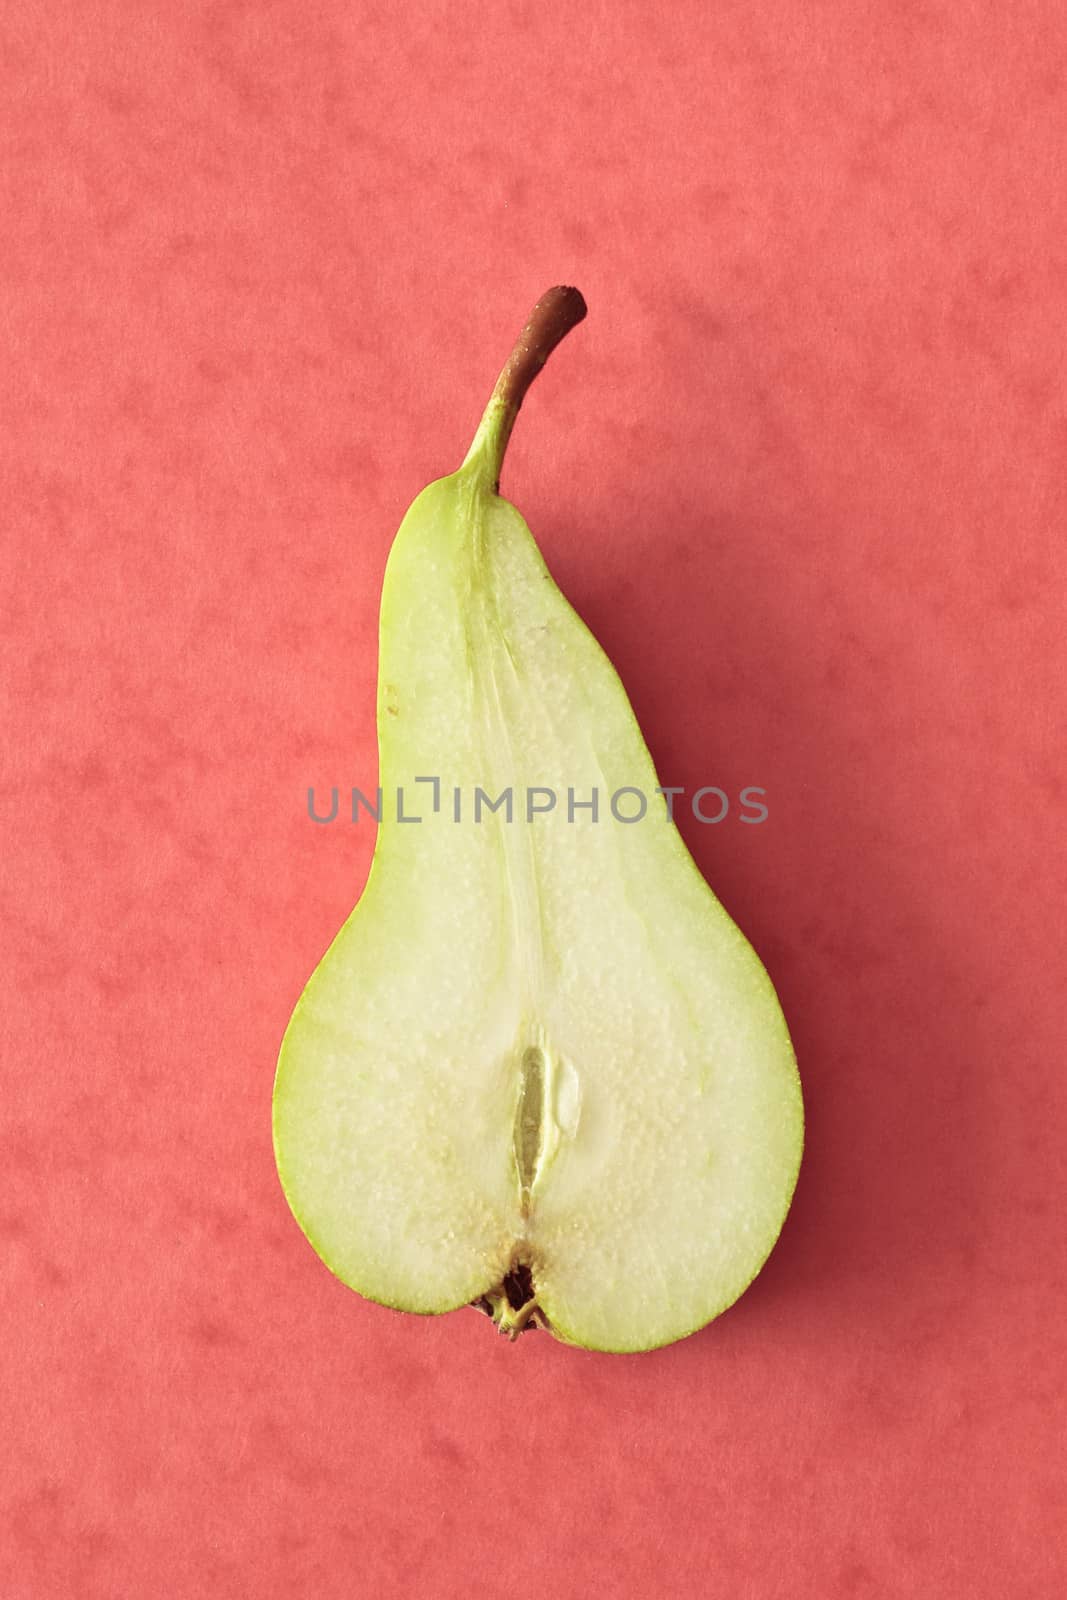 Conference pear by trgowanlock